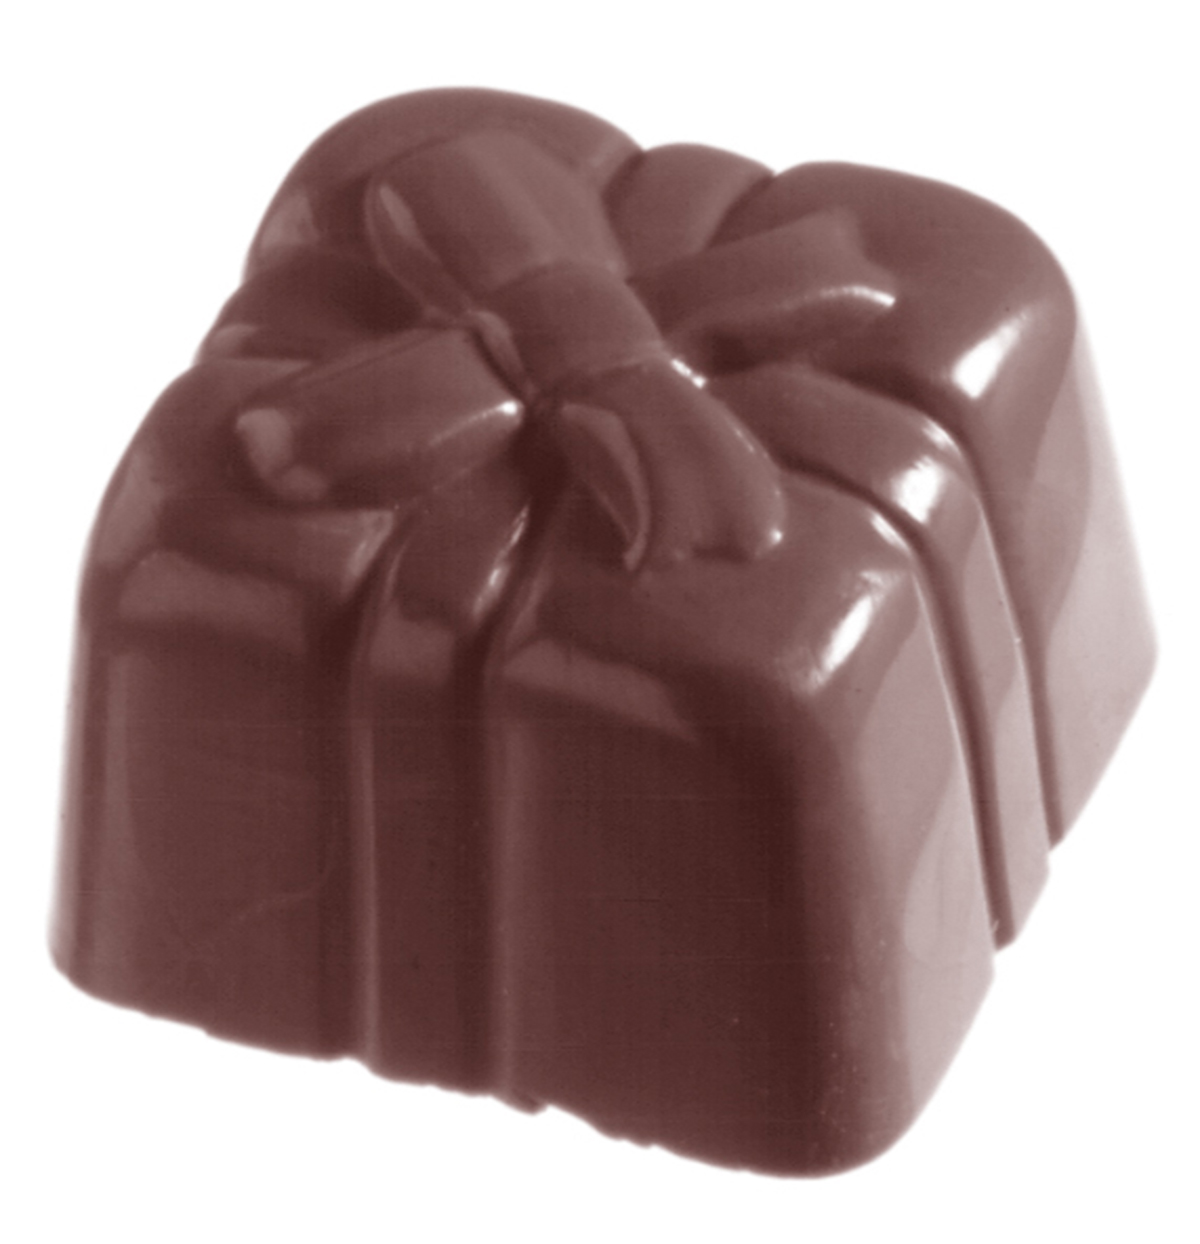 Se Professionel chokoladeform i polycarbonat - Present CW1036 hos BageTid.dk